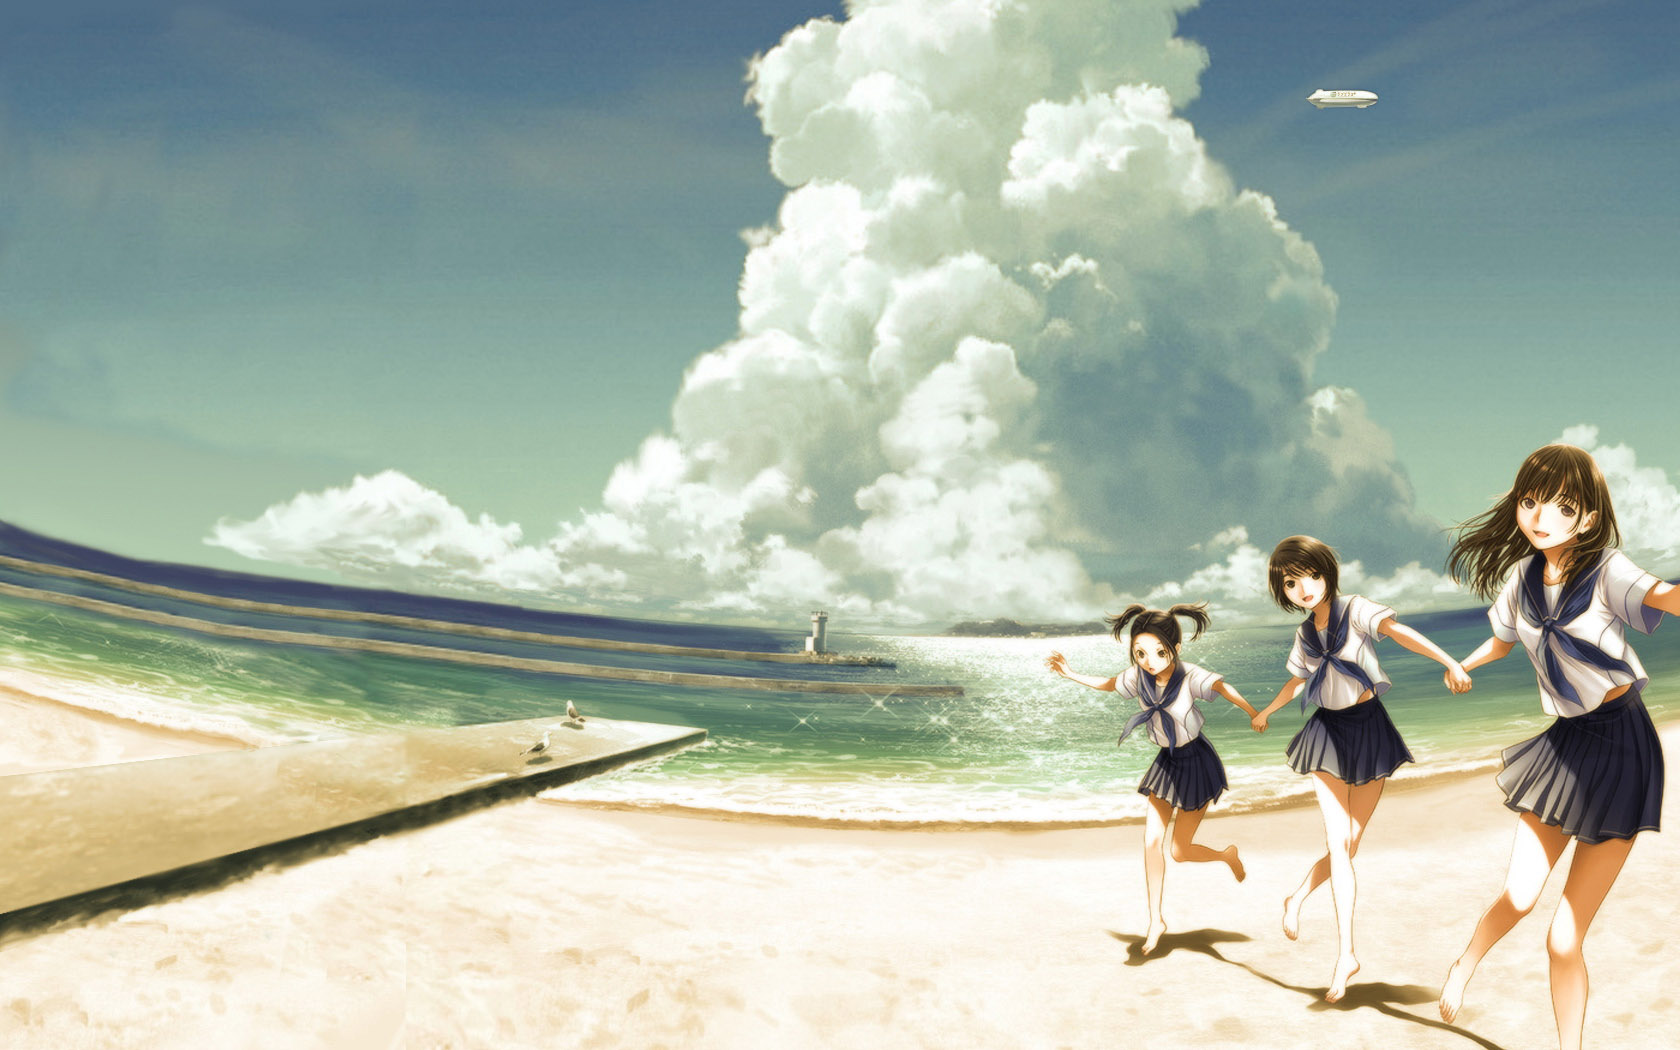 Beautiful anime scenery wallpaper